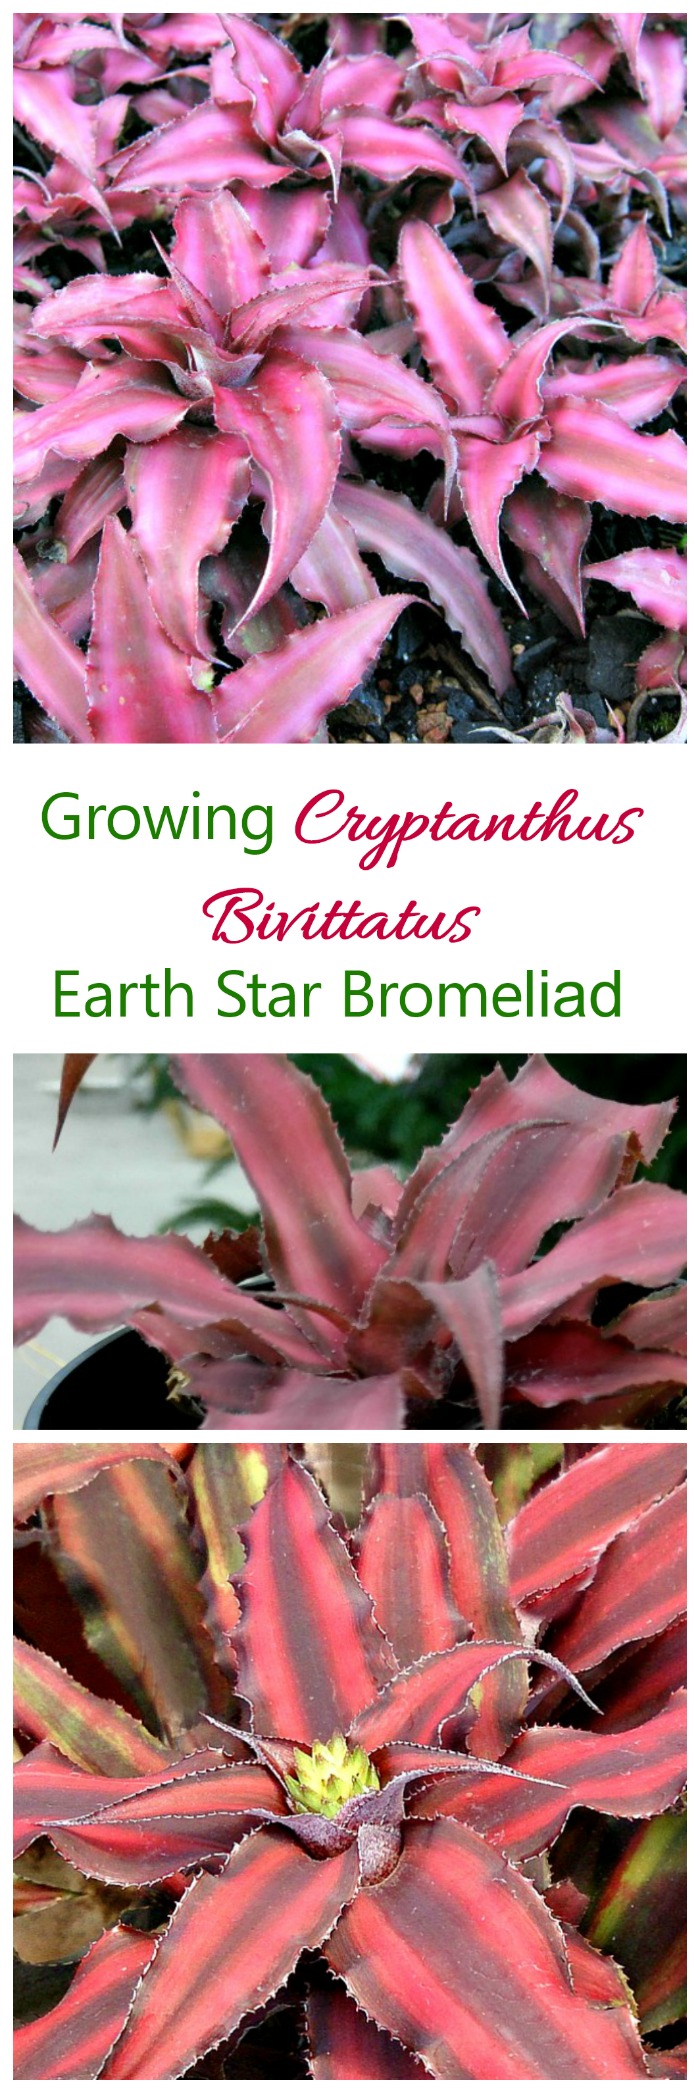 Cryptanthus Bivittatus – Lumalagong Earth Star Bromeliad